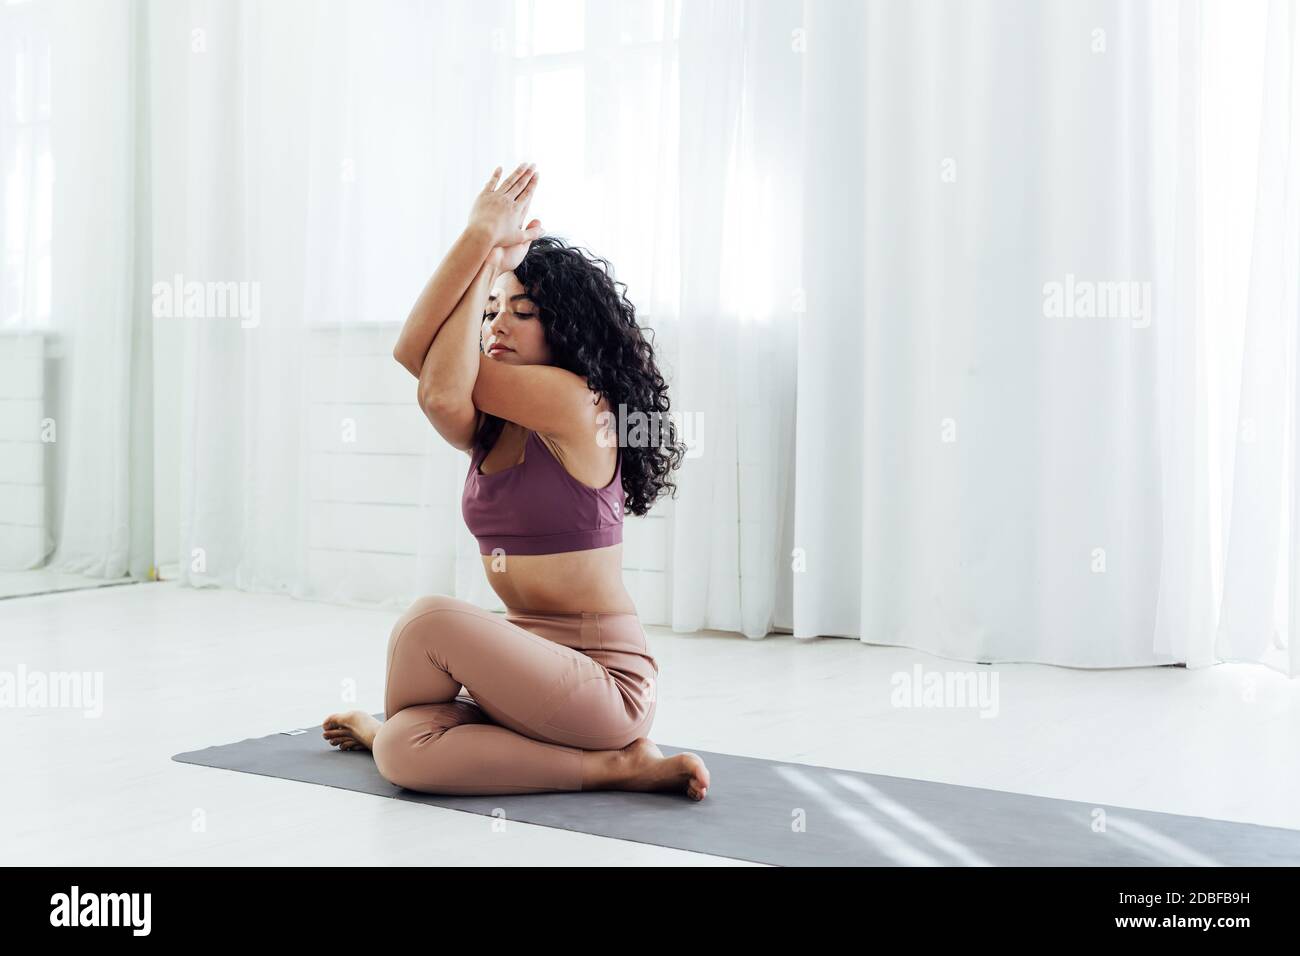 Oriental woman engaged in yoga class asana gymnastics fitness flexibility Stock Photo